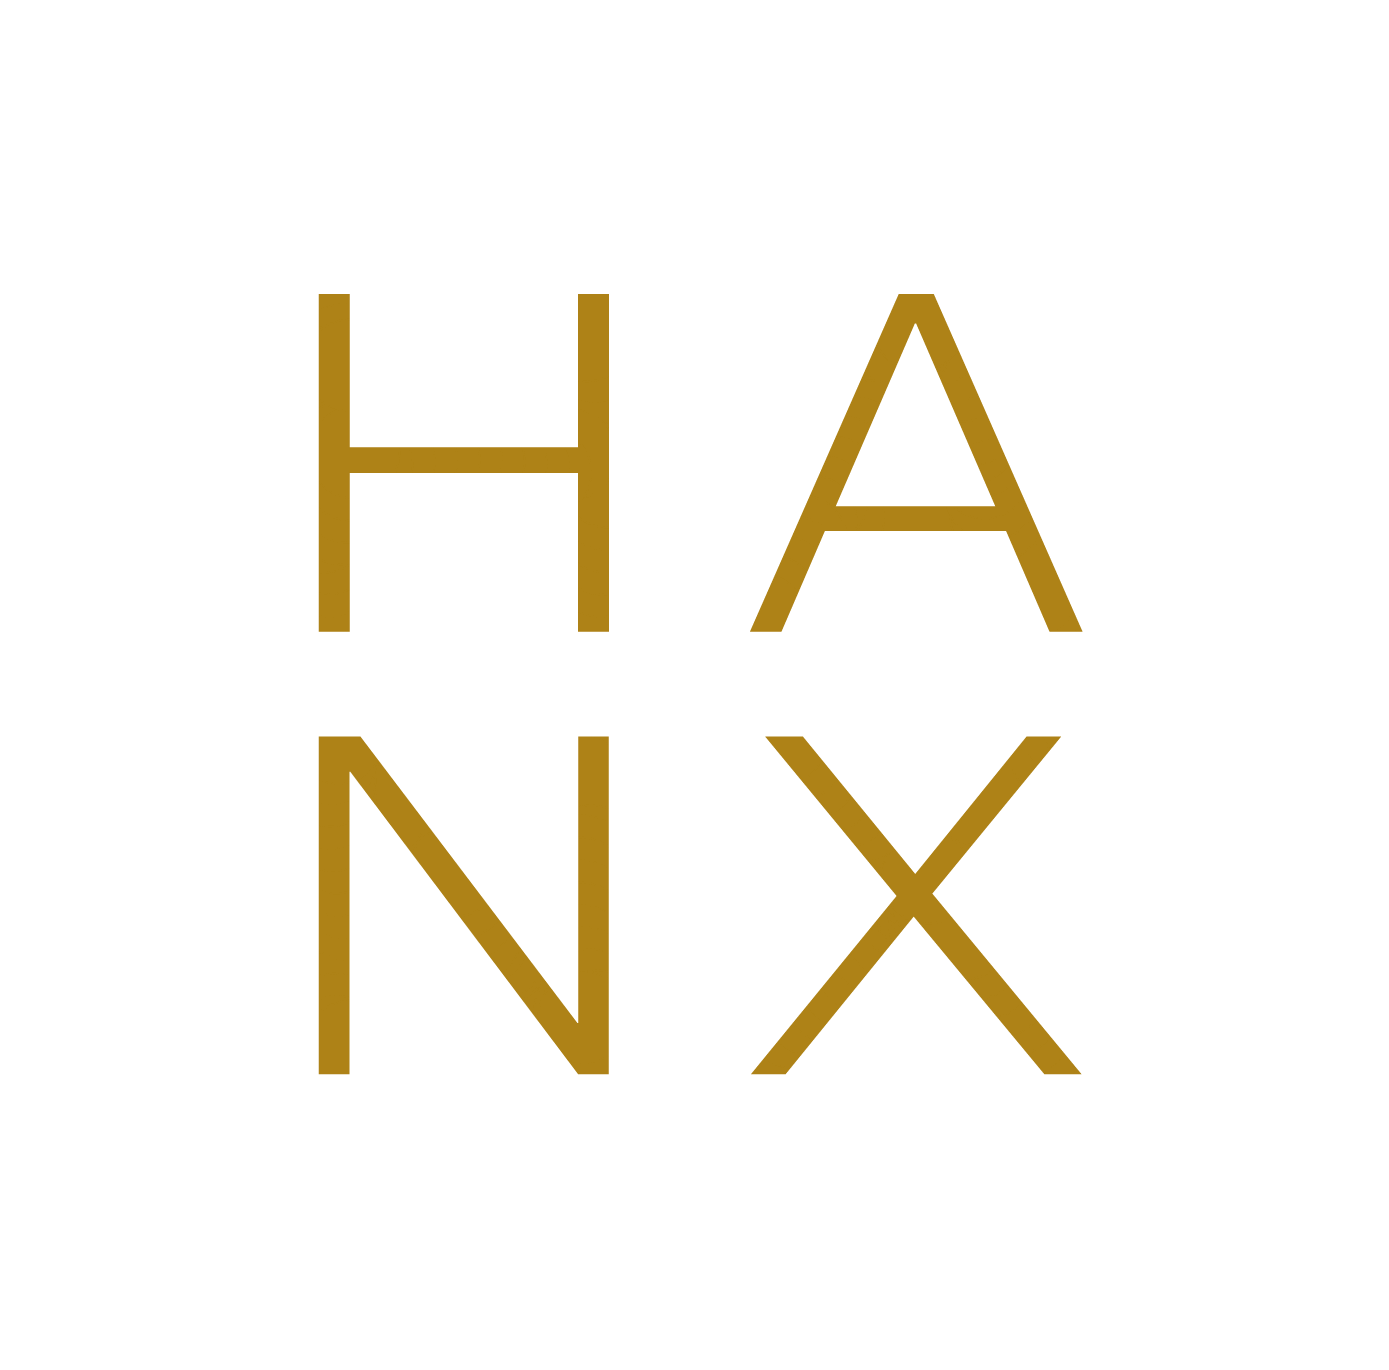 hanx logo.png